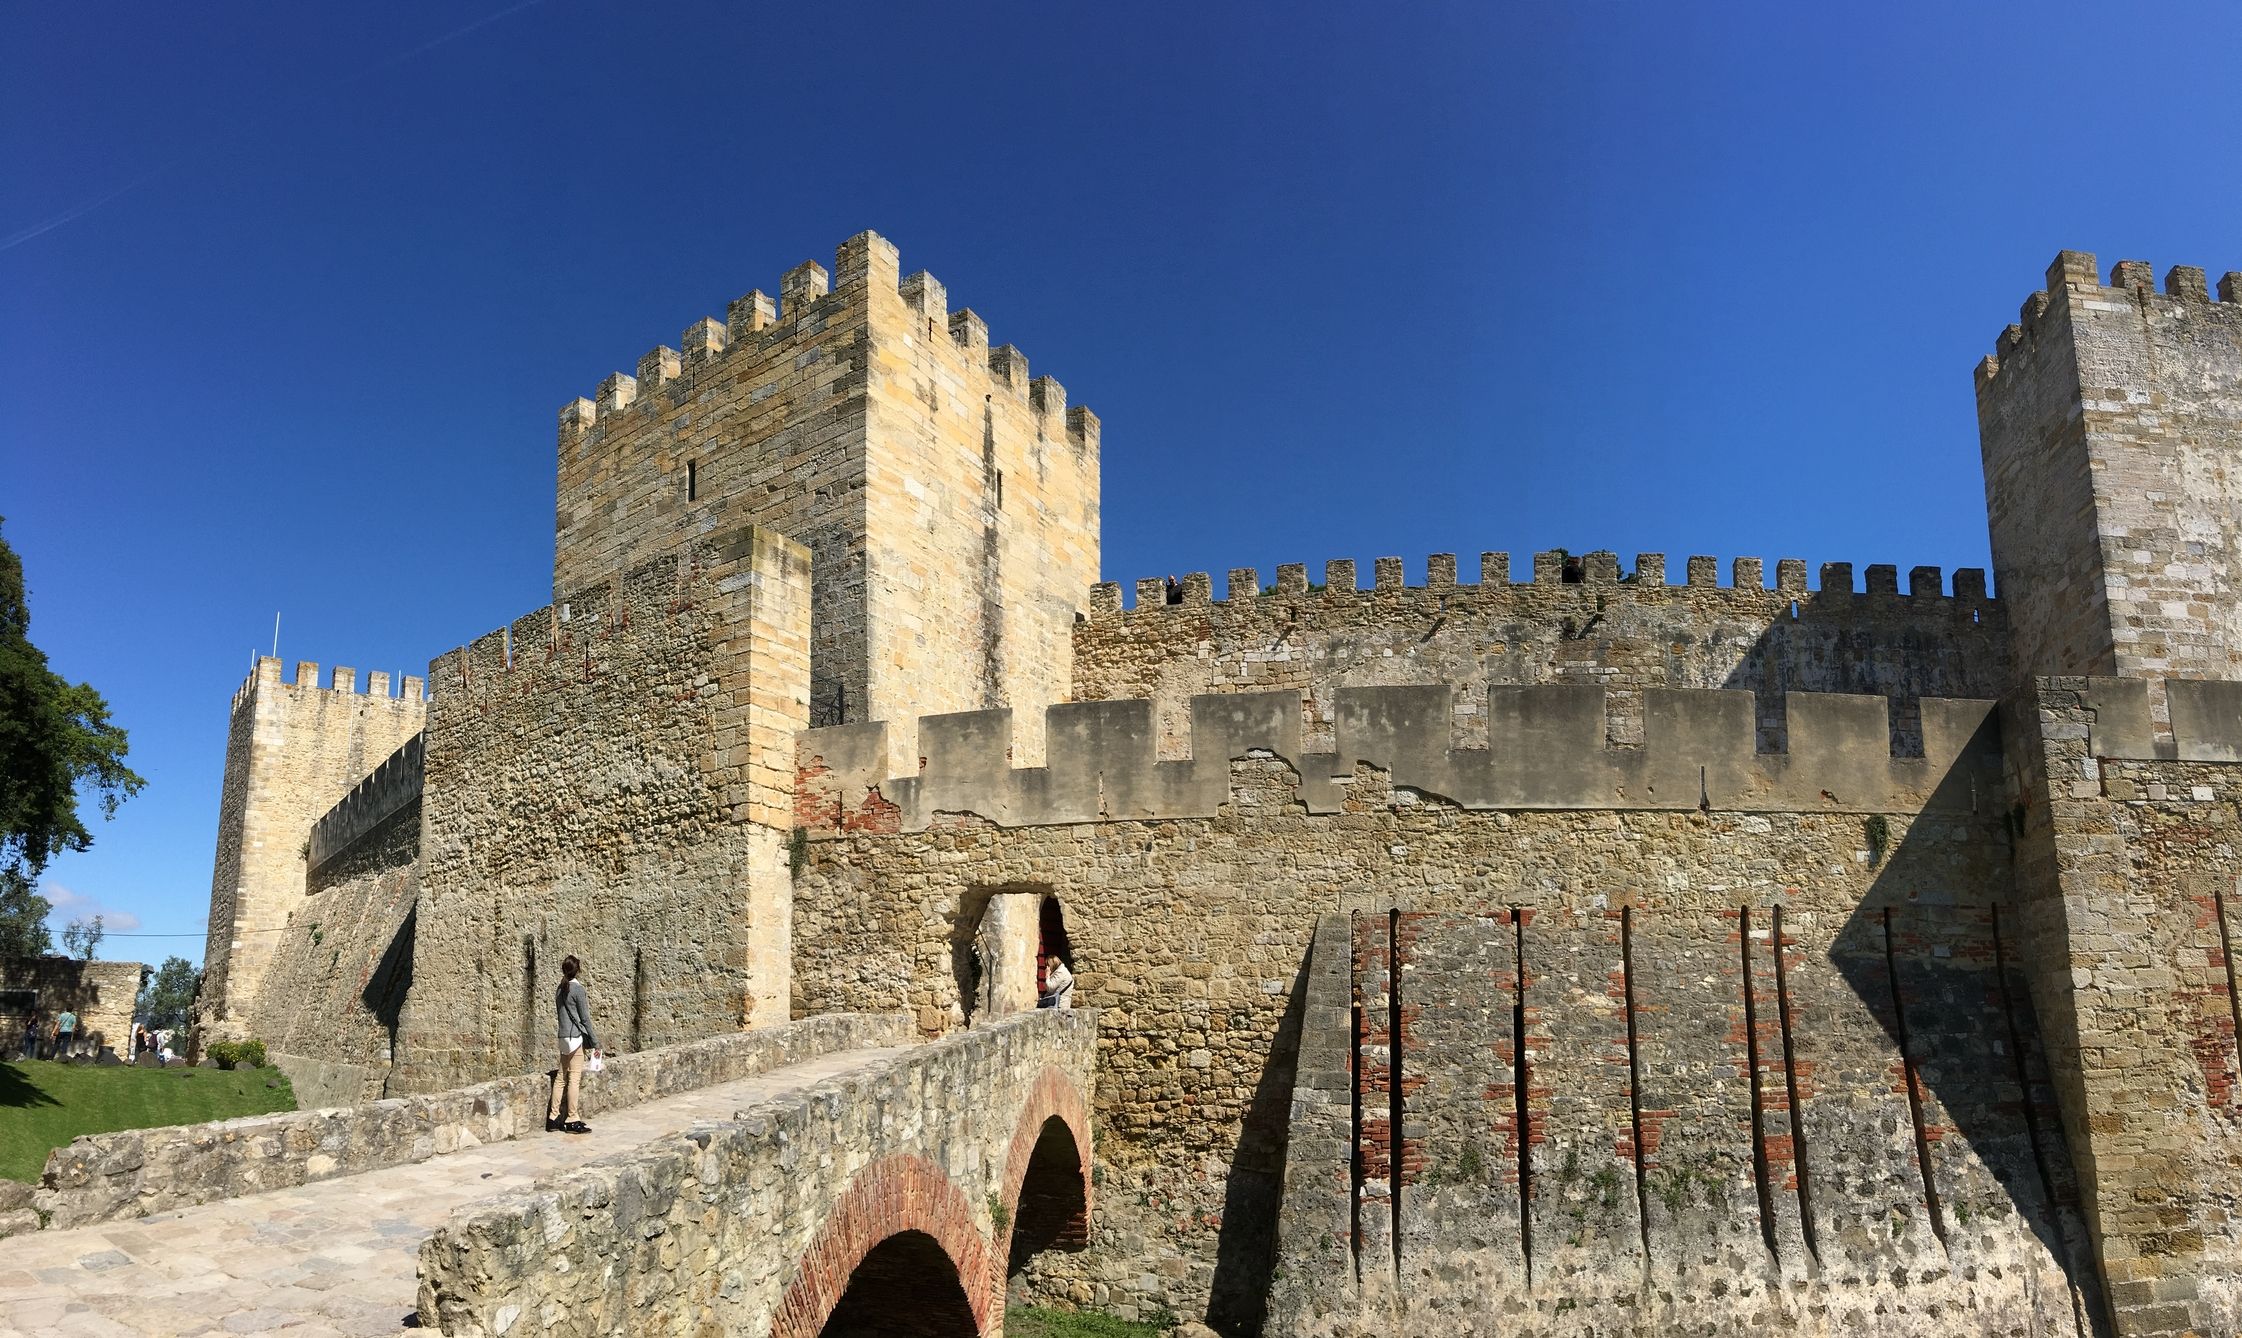 Castelo de S. Jorge in Lisbon, Portugal